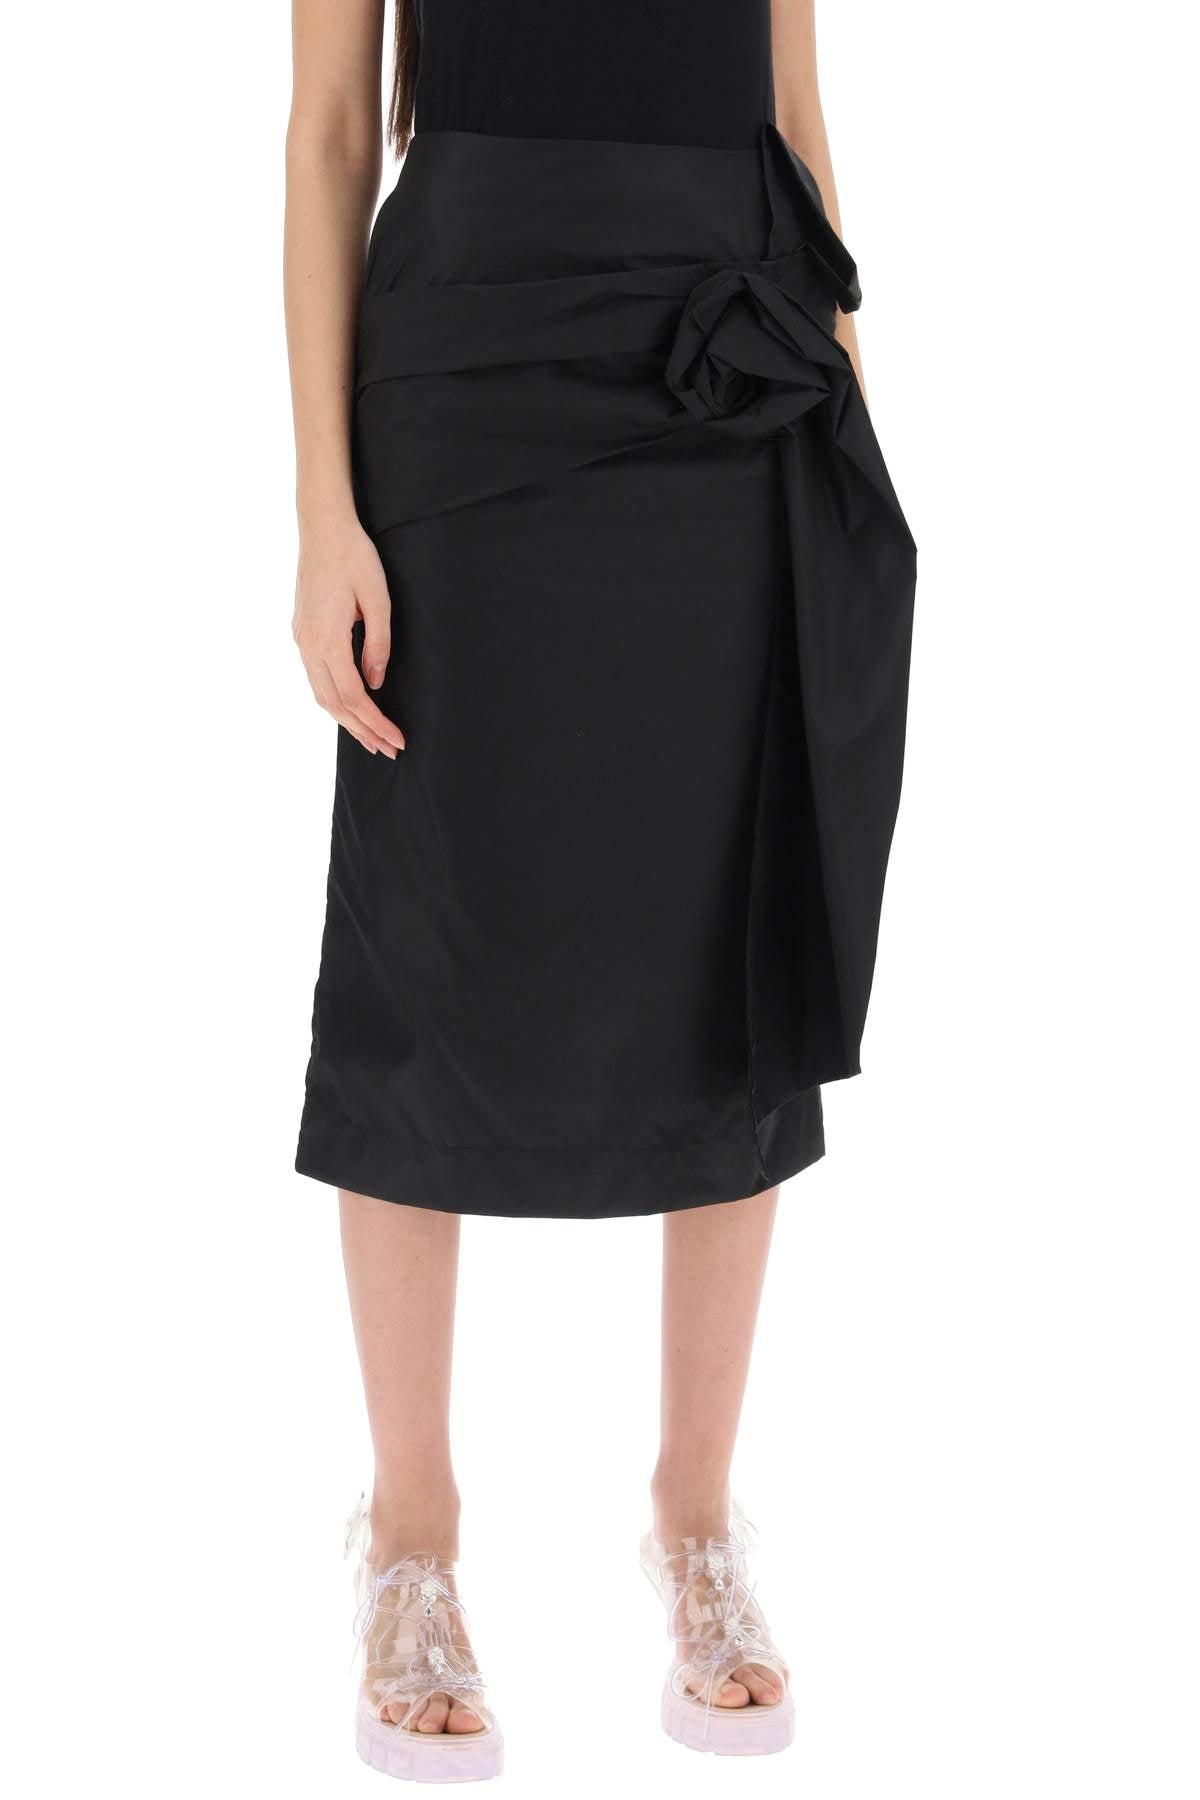 Simone rocha pencil skirt with floral applique-1